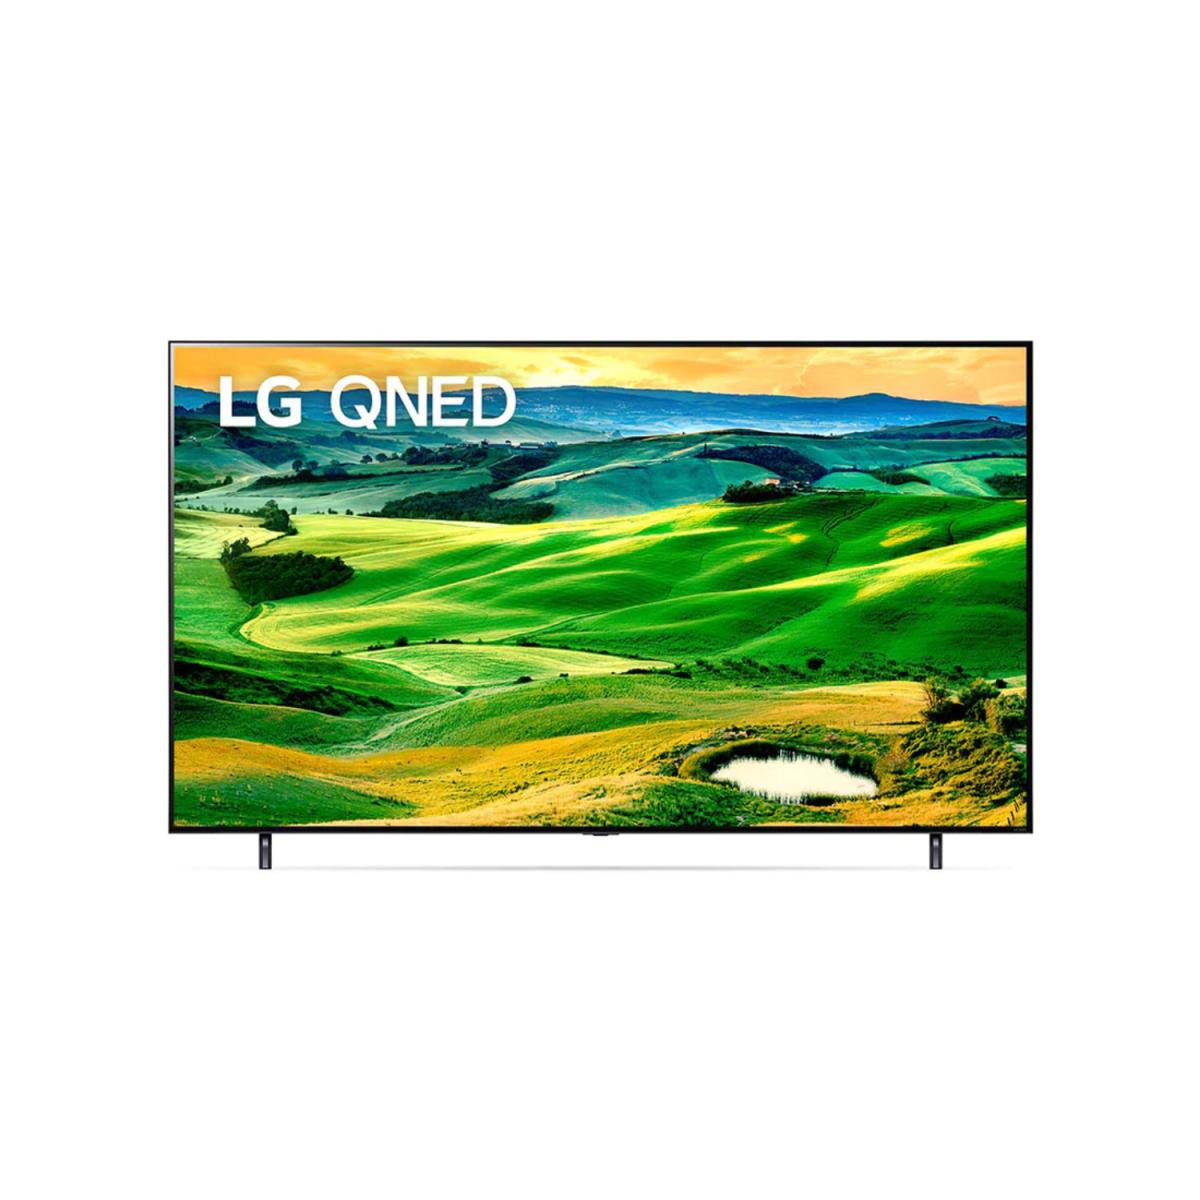 TV LG QNED 75" SMART AI THINQ 4K